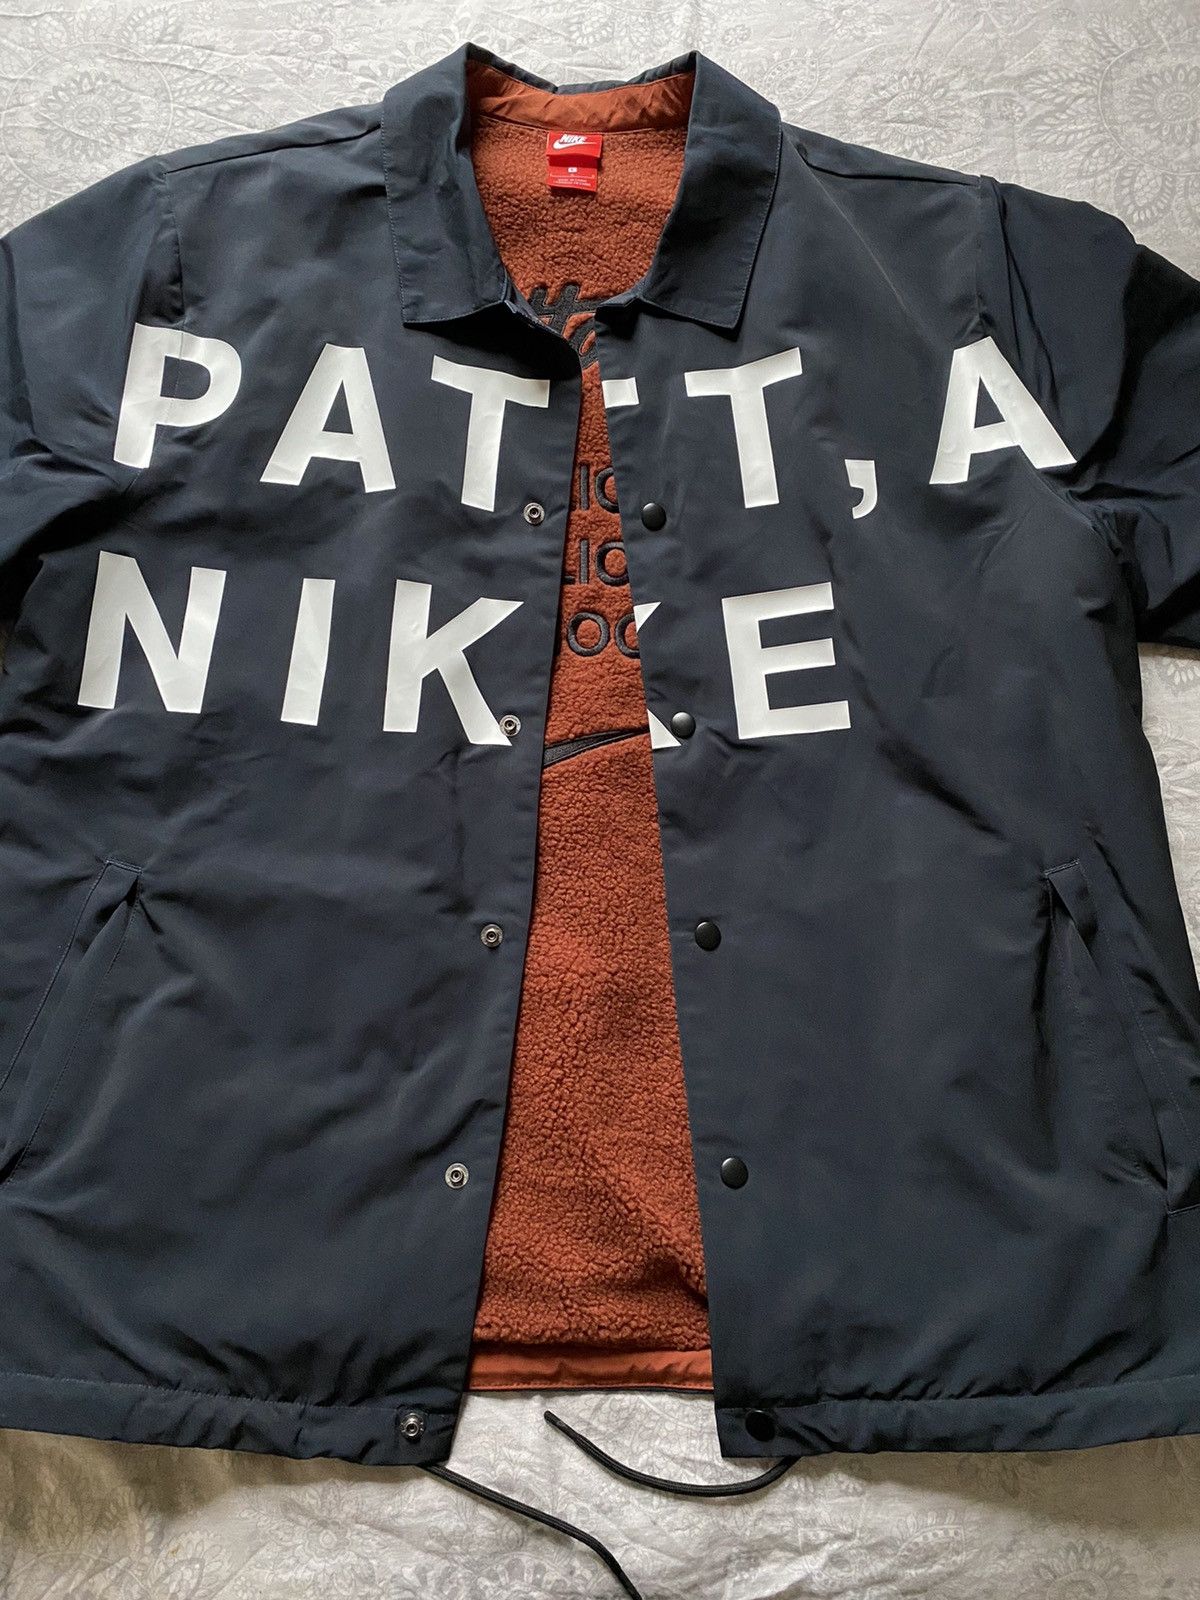 Zelfgenoegzaamheid tapijt propeller Nike Nike X Patta Coach Jacket | Grailed